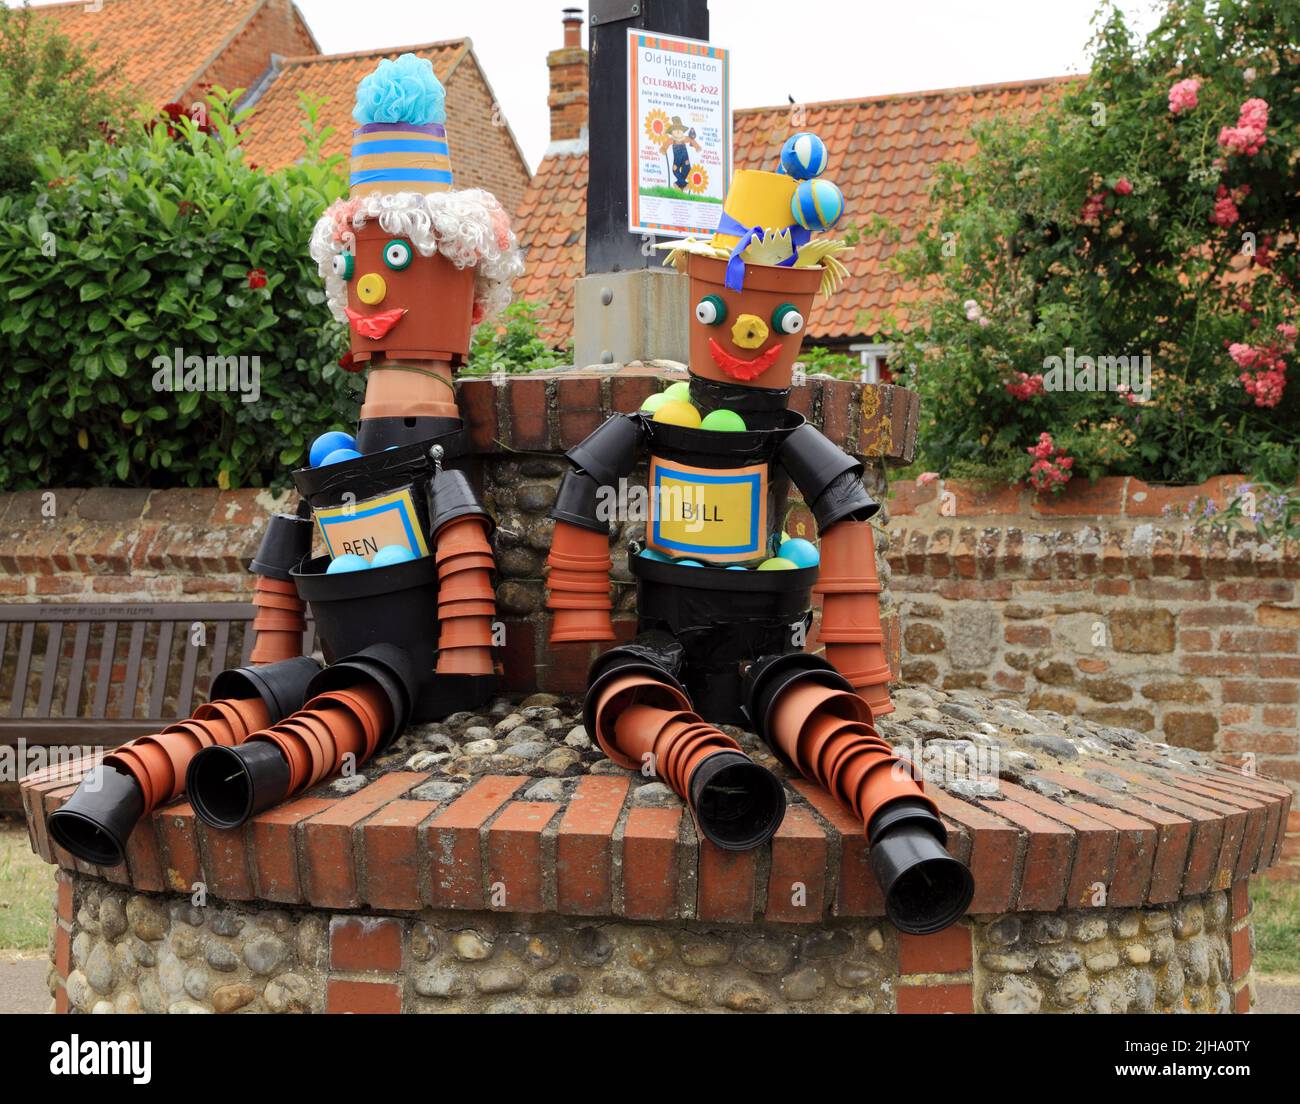 Bill and Ben, Flowerpot Men, Festival decoration, models, puppets, Old Hunstanton Village , Norfolk, England Stock Photo